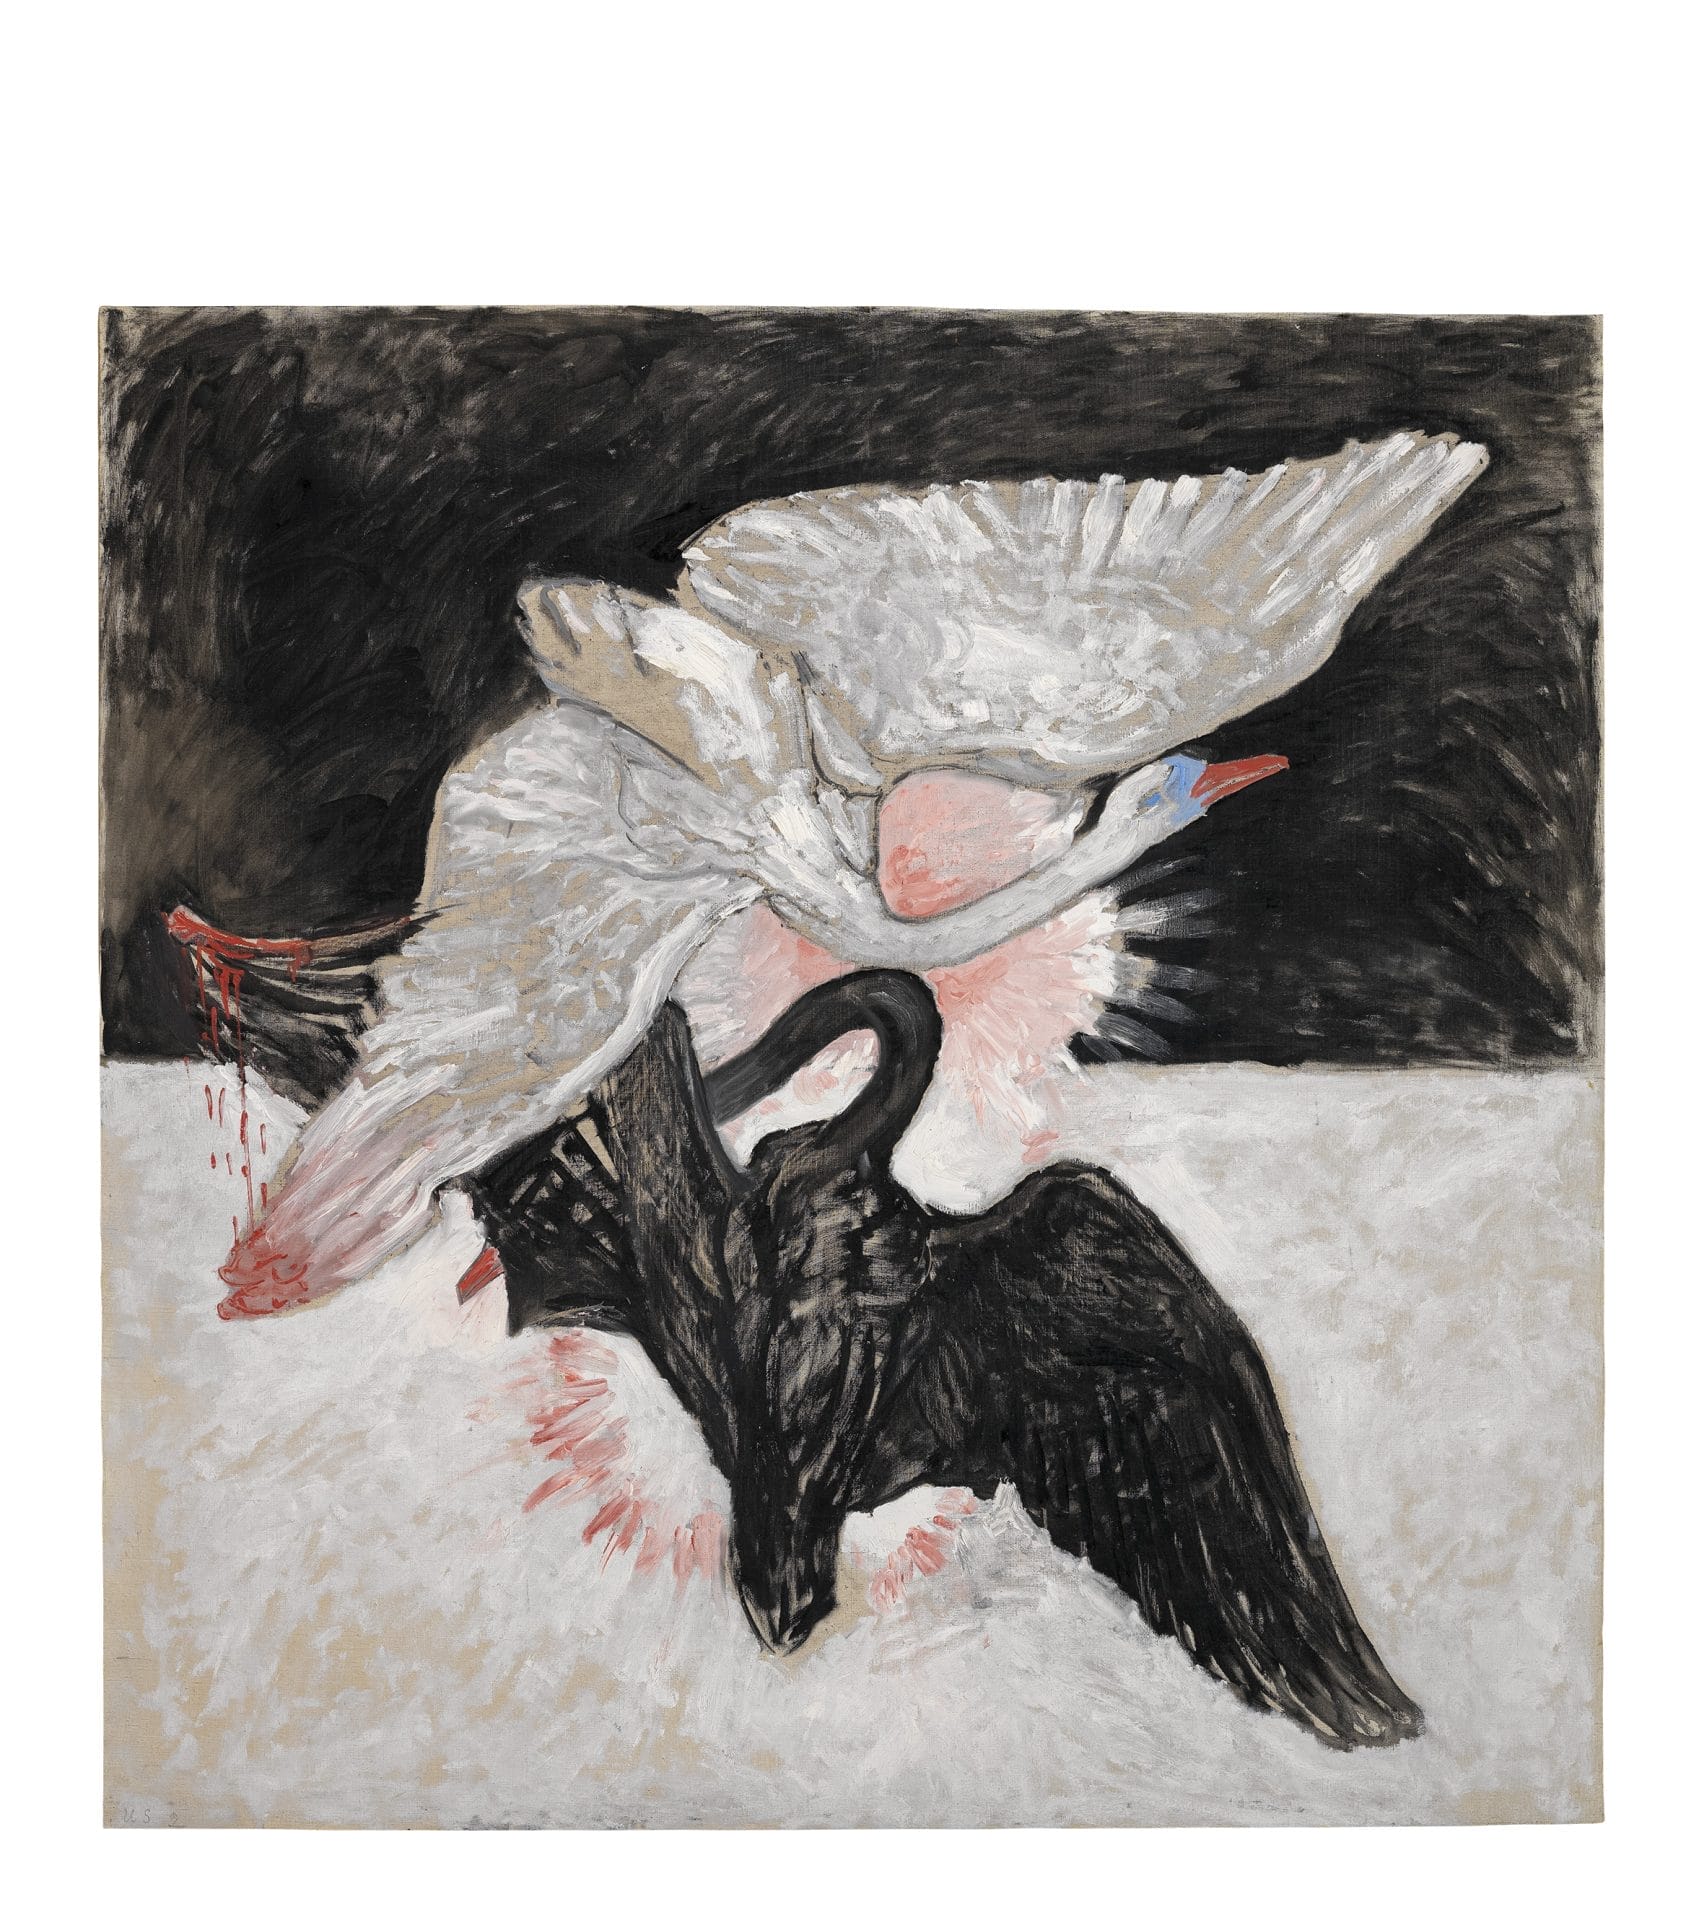 Hilma af Klint, The Swan, Serie SUW, Groep IX: Deel 1, nr. 2, 1914, olieverf op doek, 151 x 149 cm, The Hilma af Klint Foundation, Foto: The Moderna Museet, Stockholm, Zweden